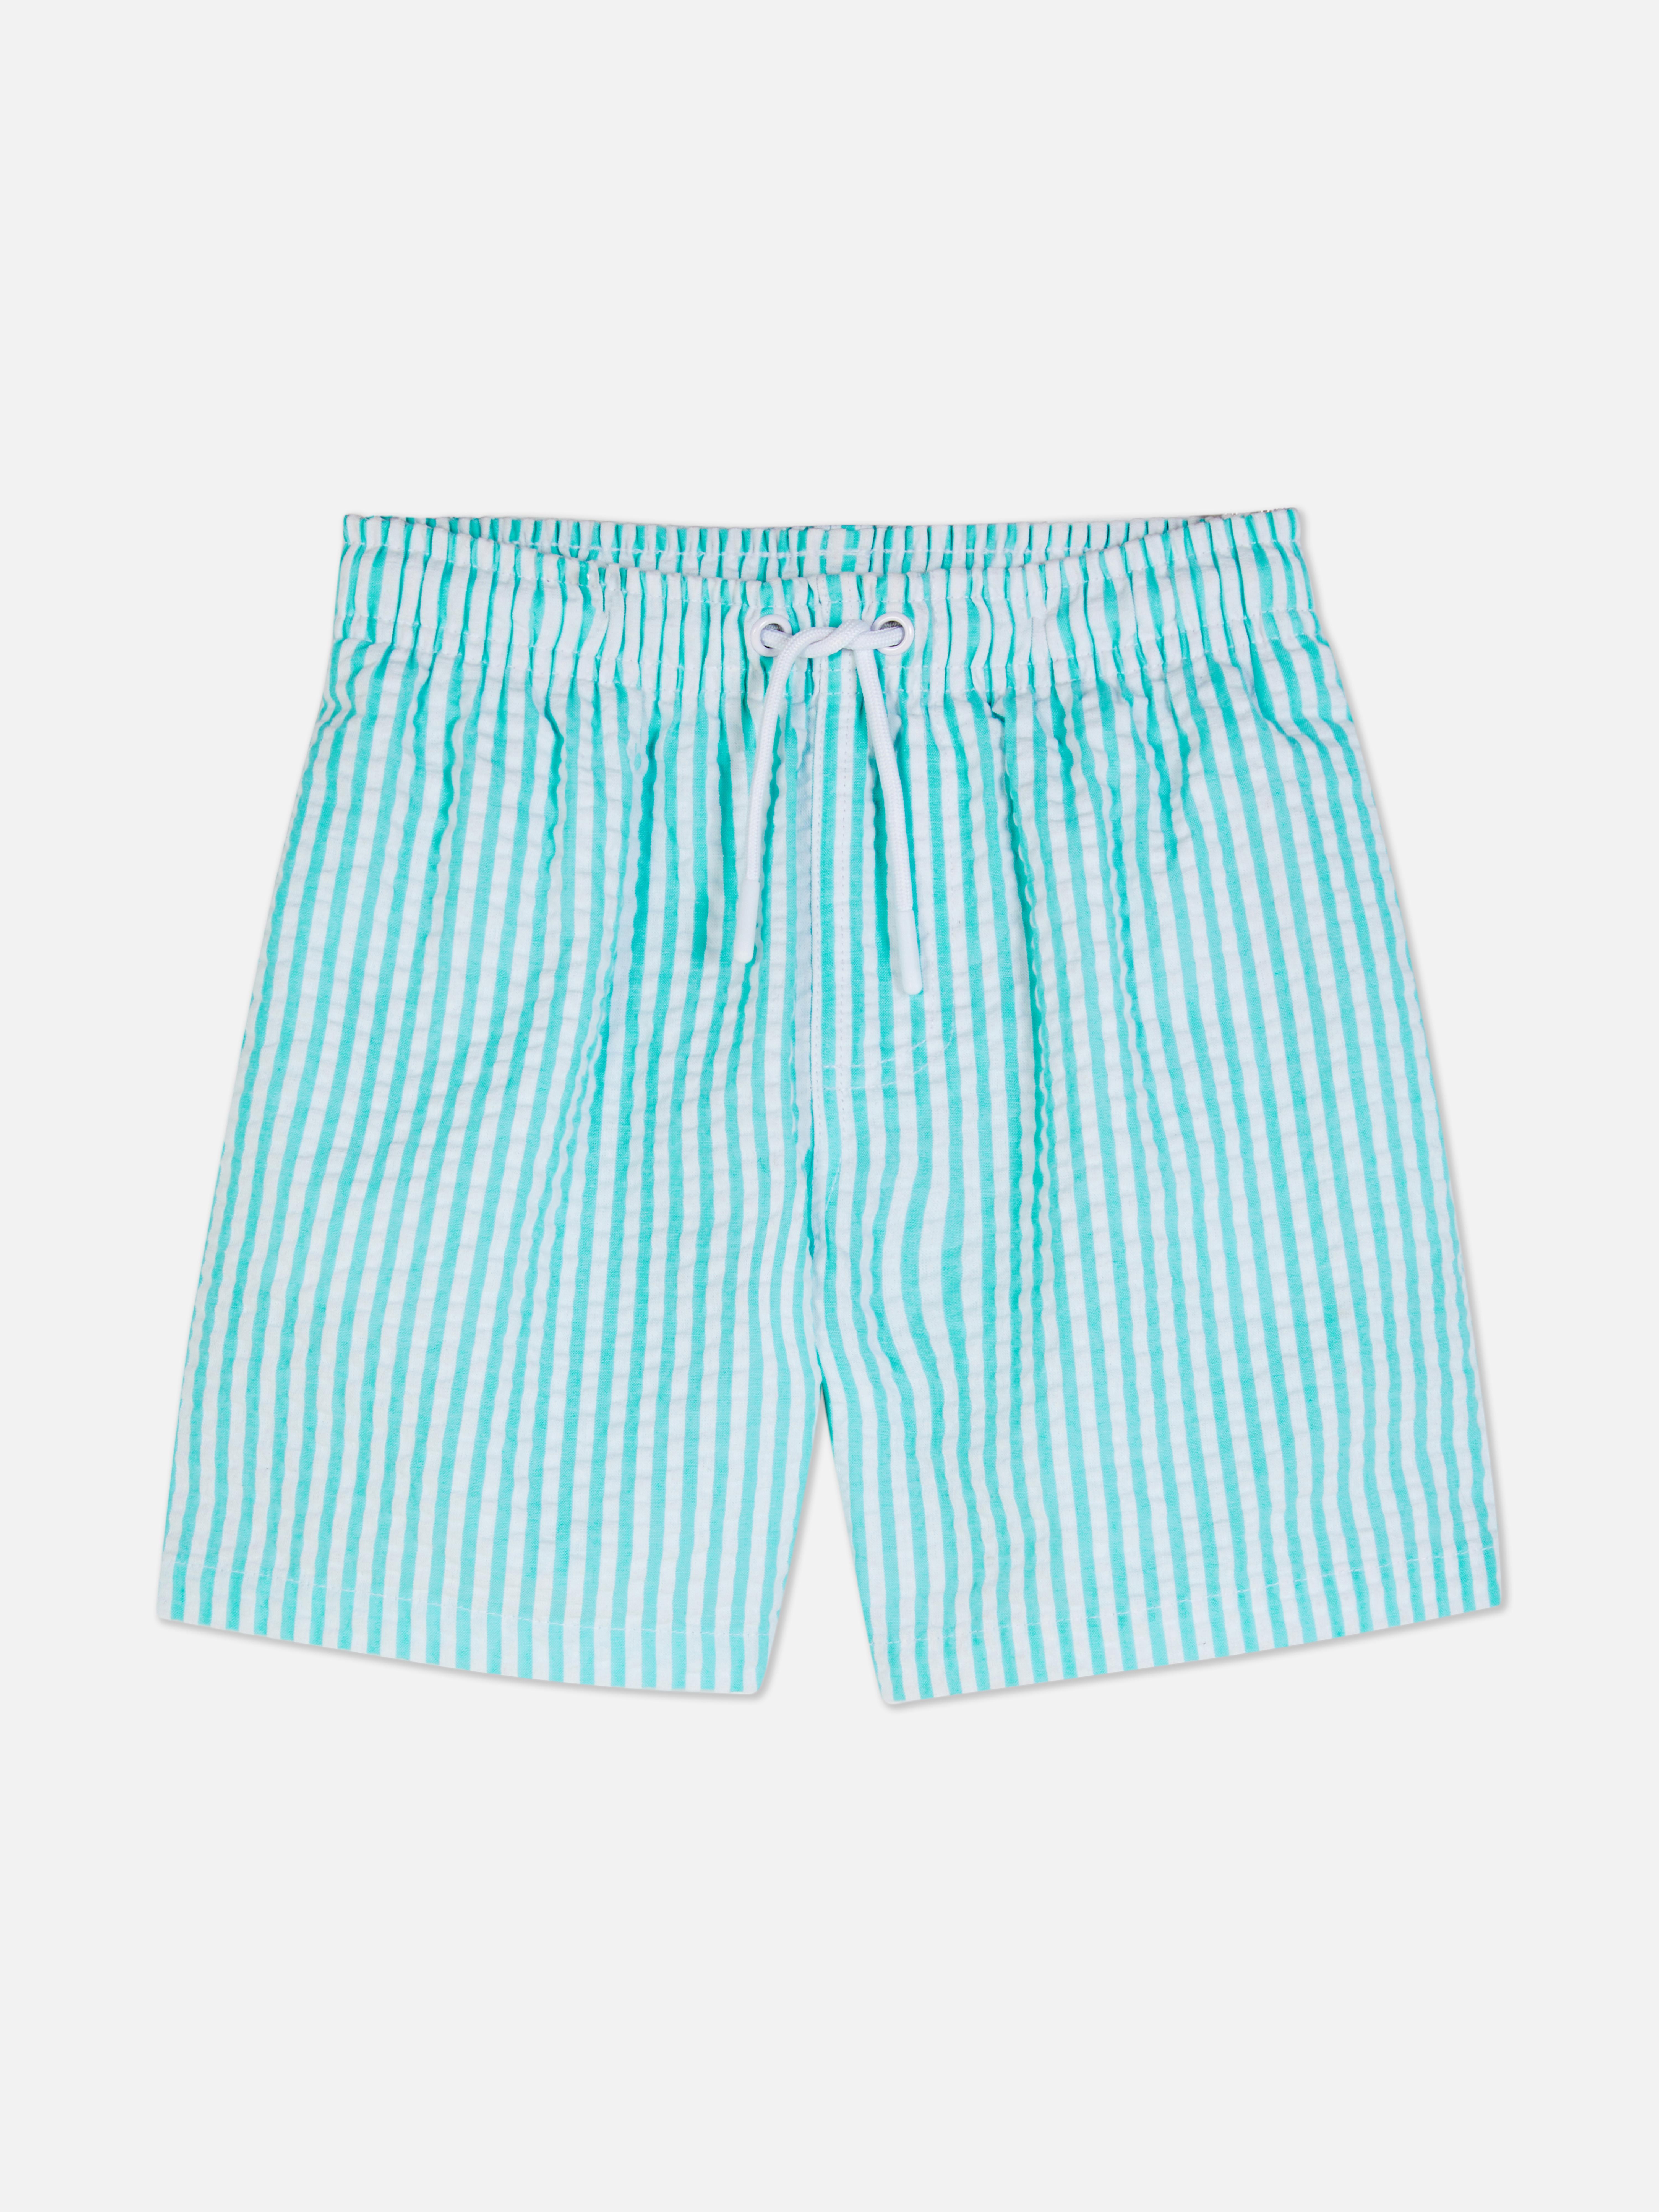 Stripe Textured Swimming Shorts